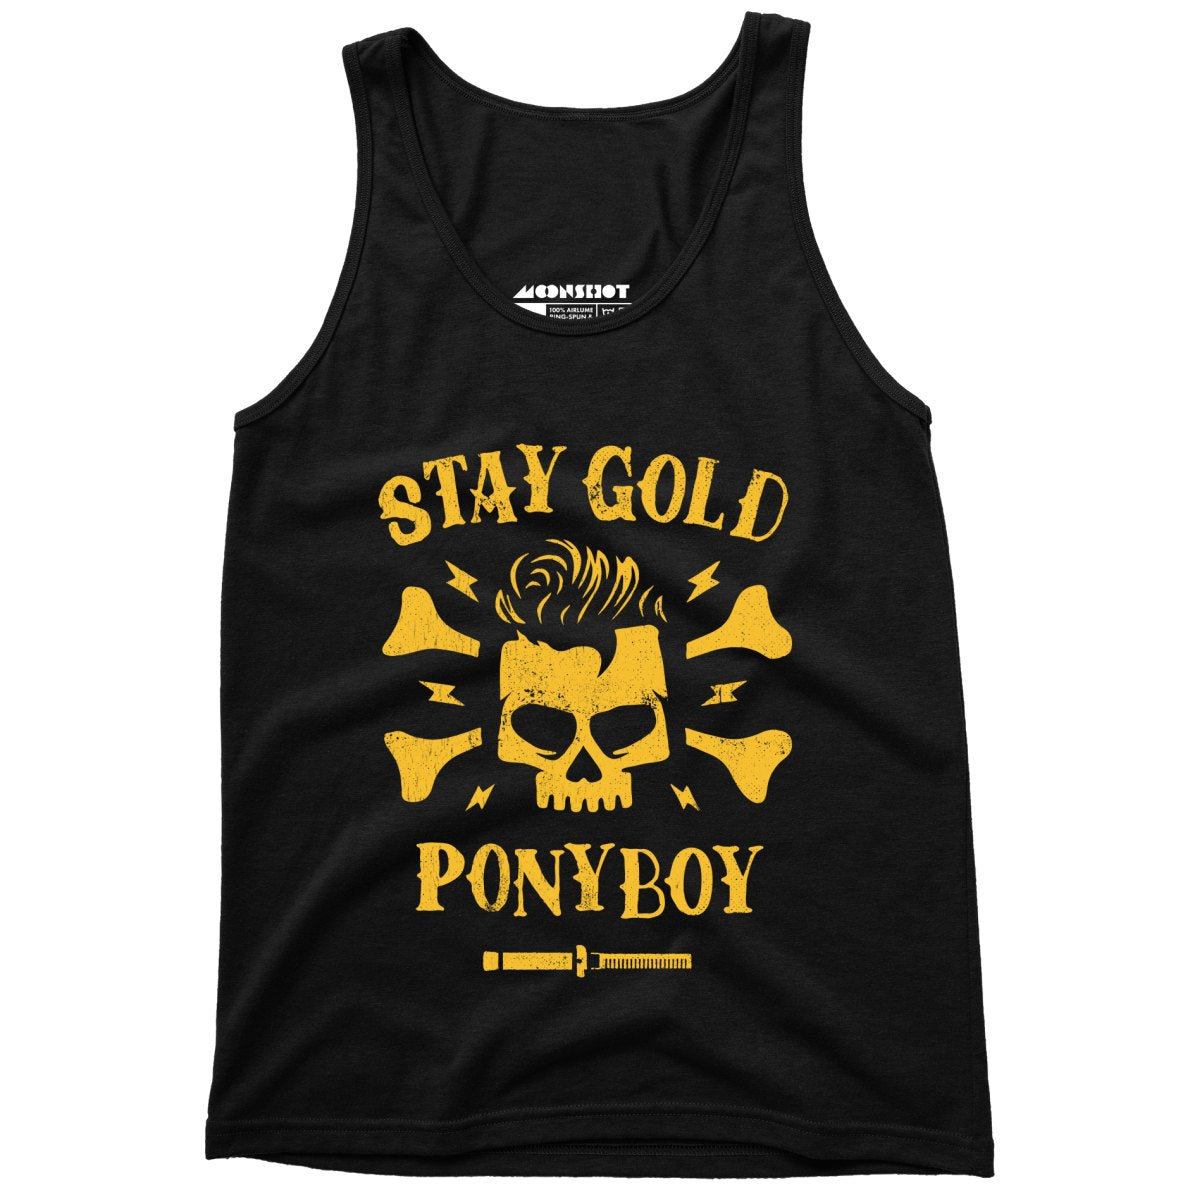 Stay Gold Ponyboy - Unisex Tank Top